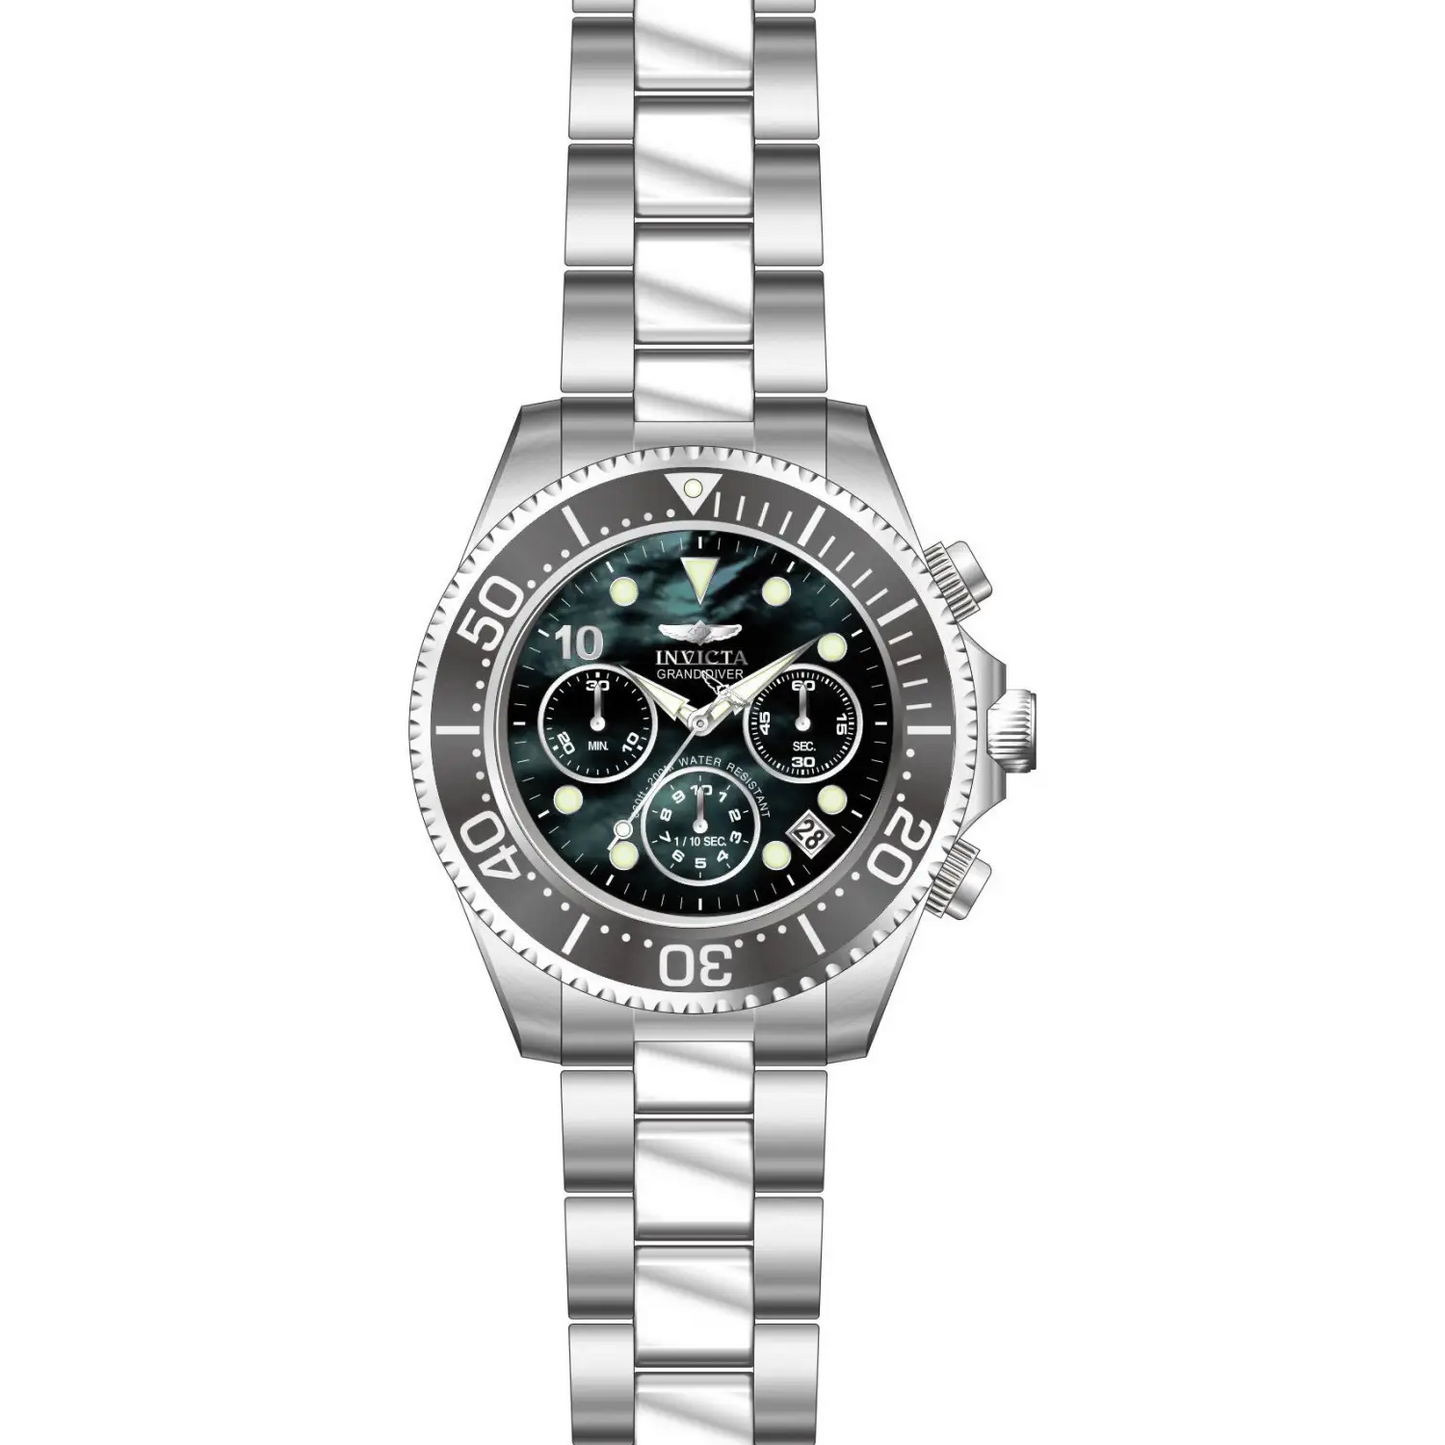 Invicta Men’s Pro Diver Quartz Chronograph Black Dial Watch